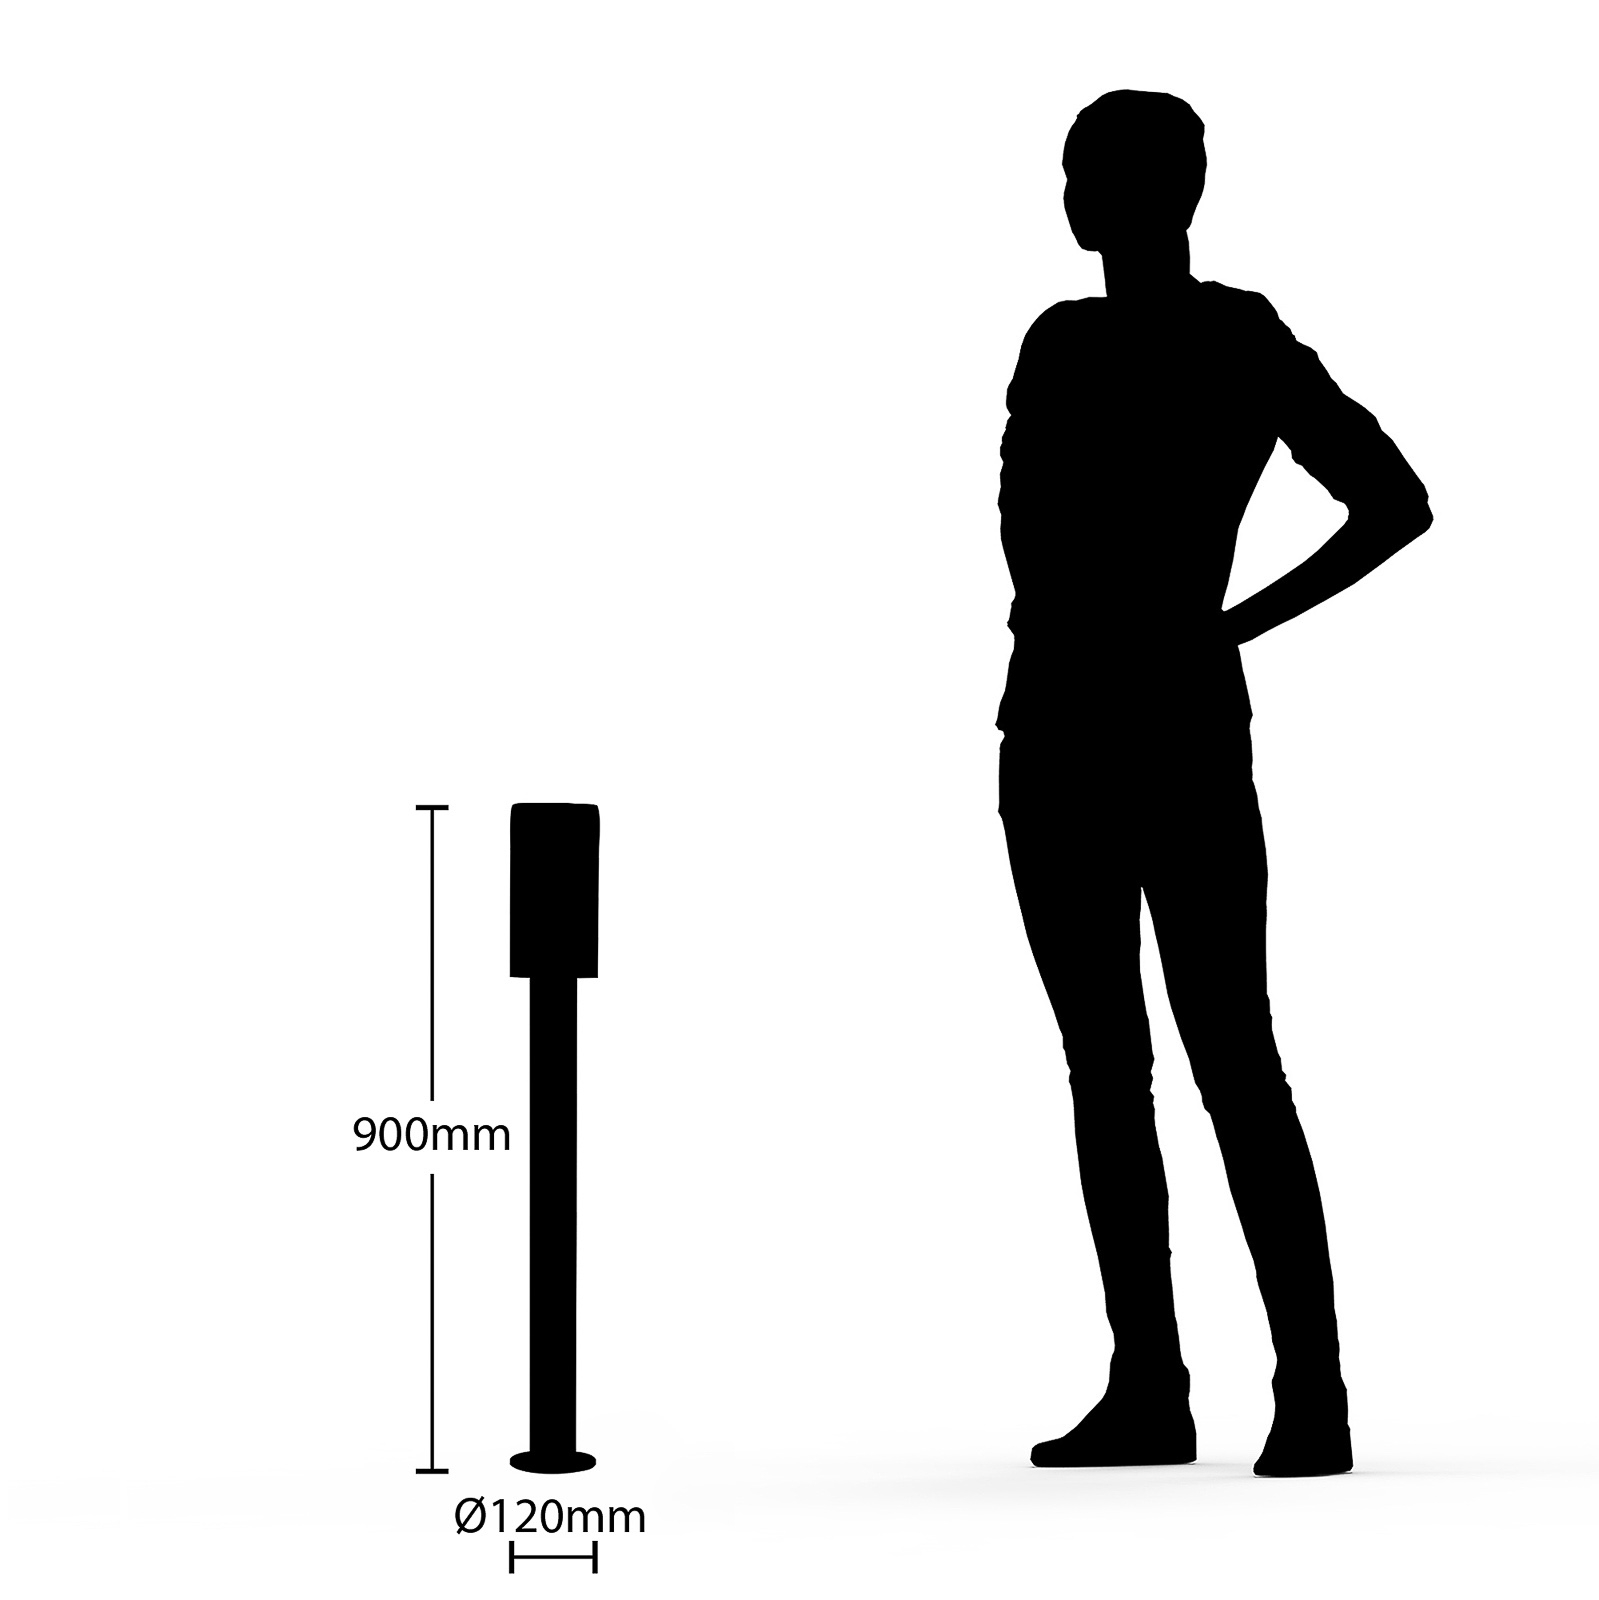 Lucande Kelini gånglampa, 90 cm, mörkgrå